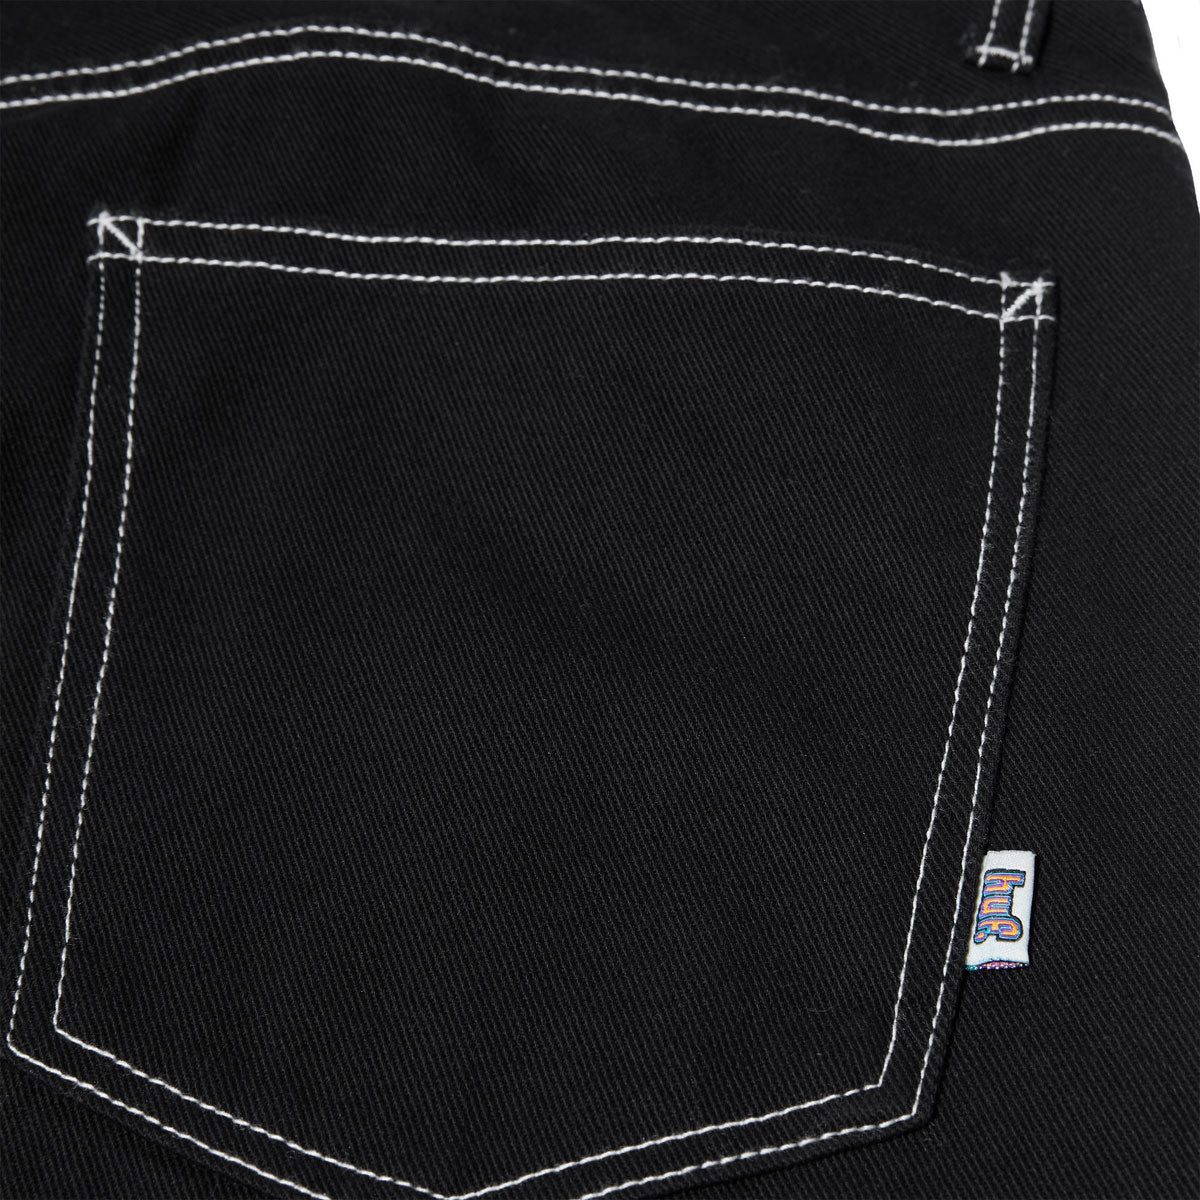 HUF Cromer Pants - Black/White image 5